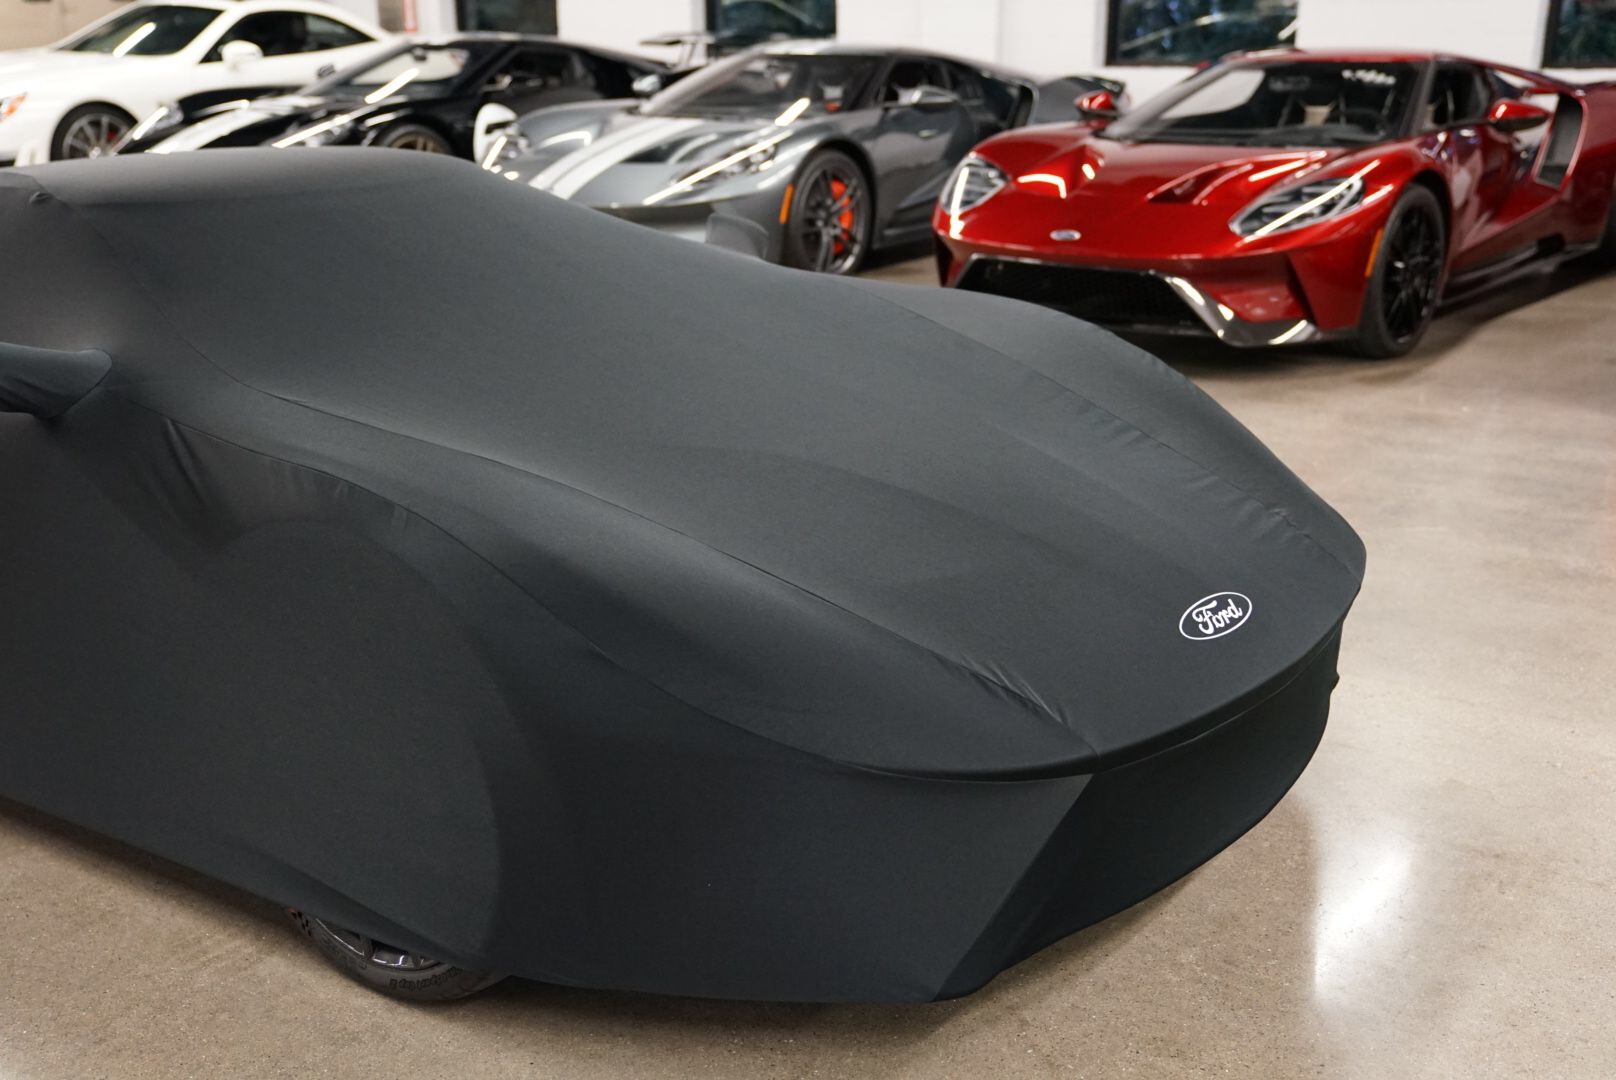 OEM Original indoor car cover fits Ford GT now $ 284.95